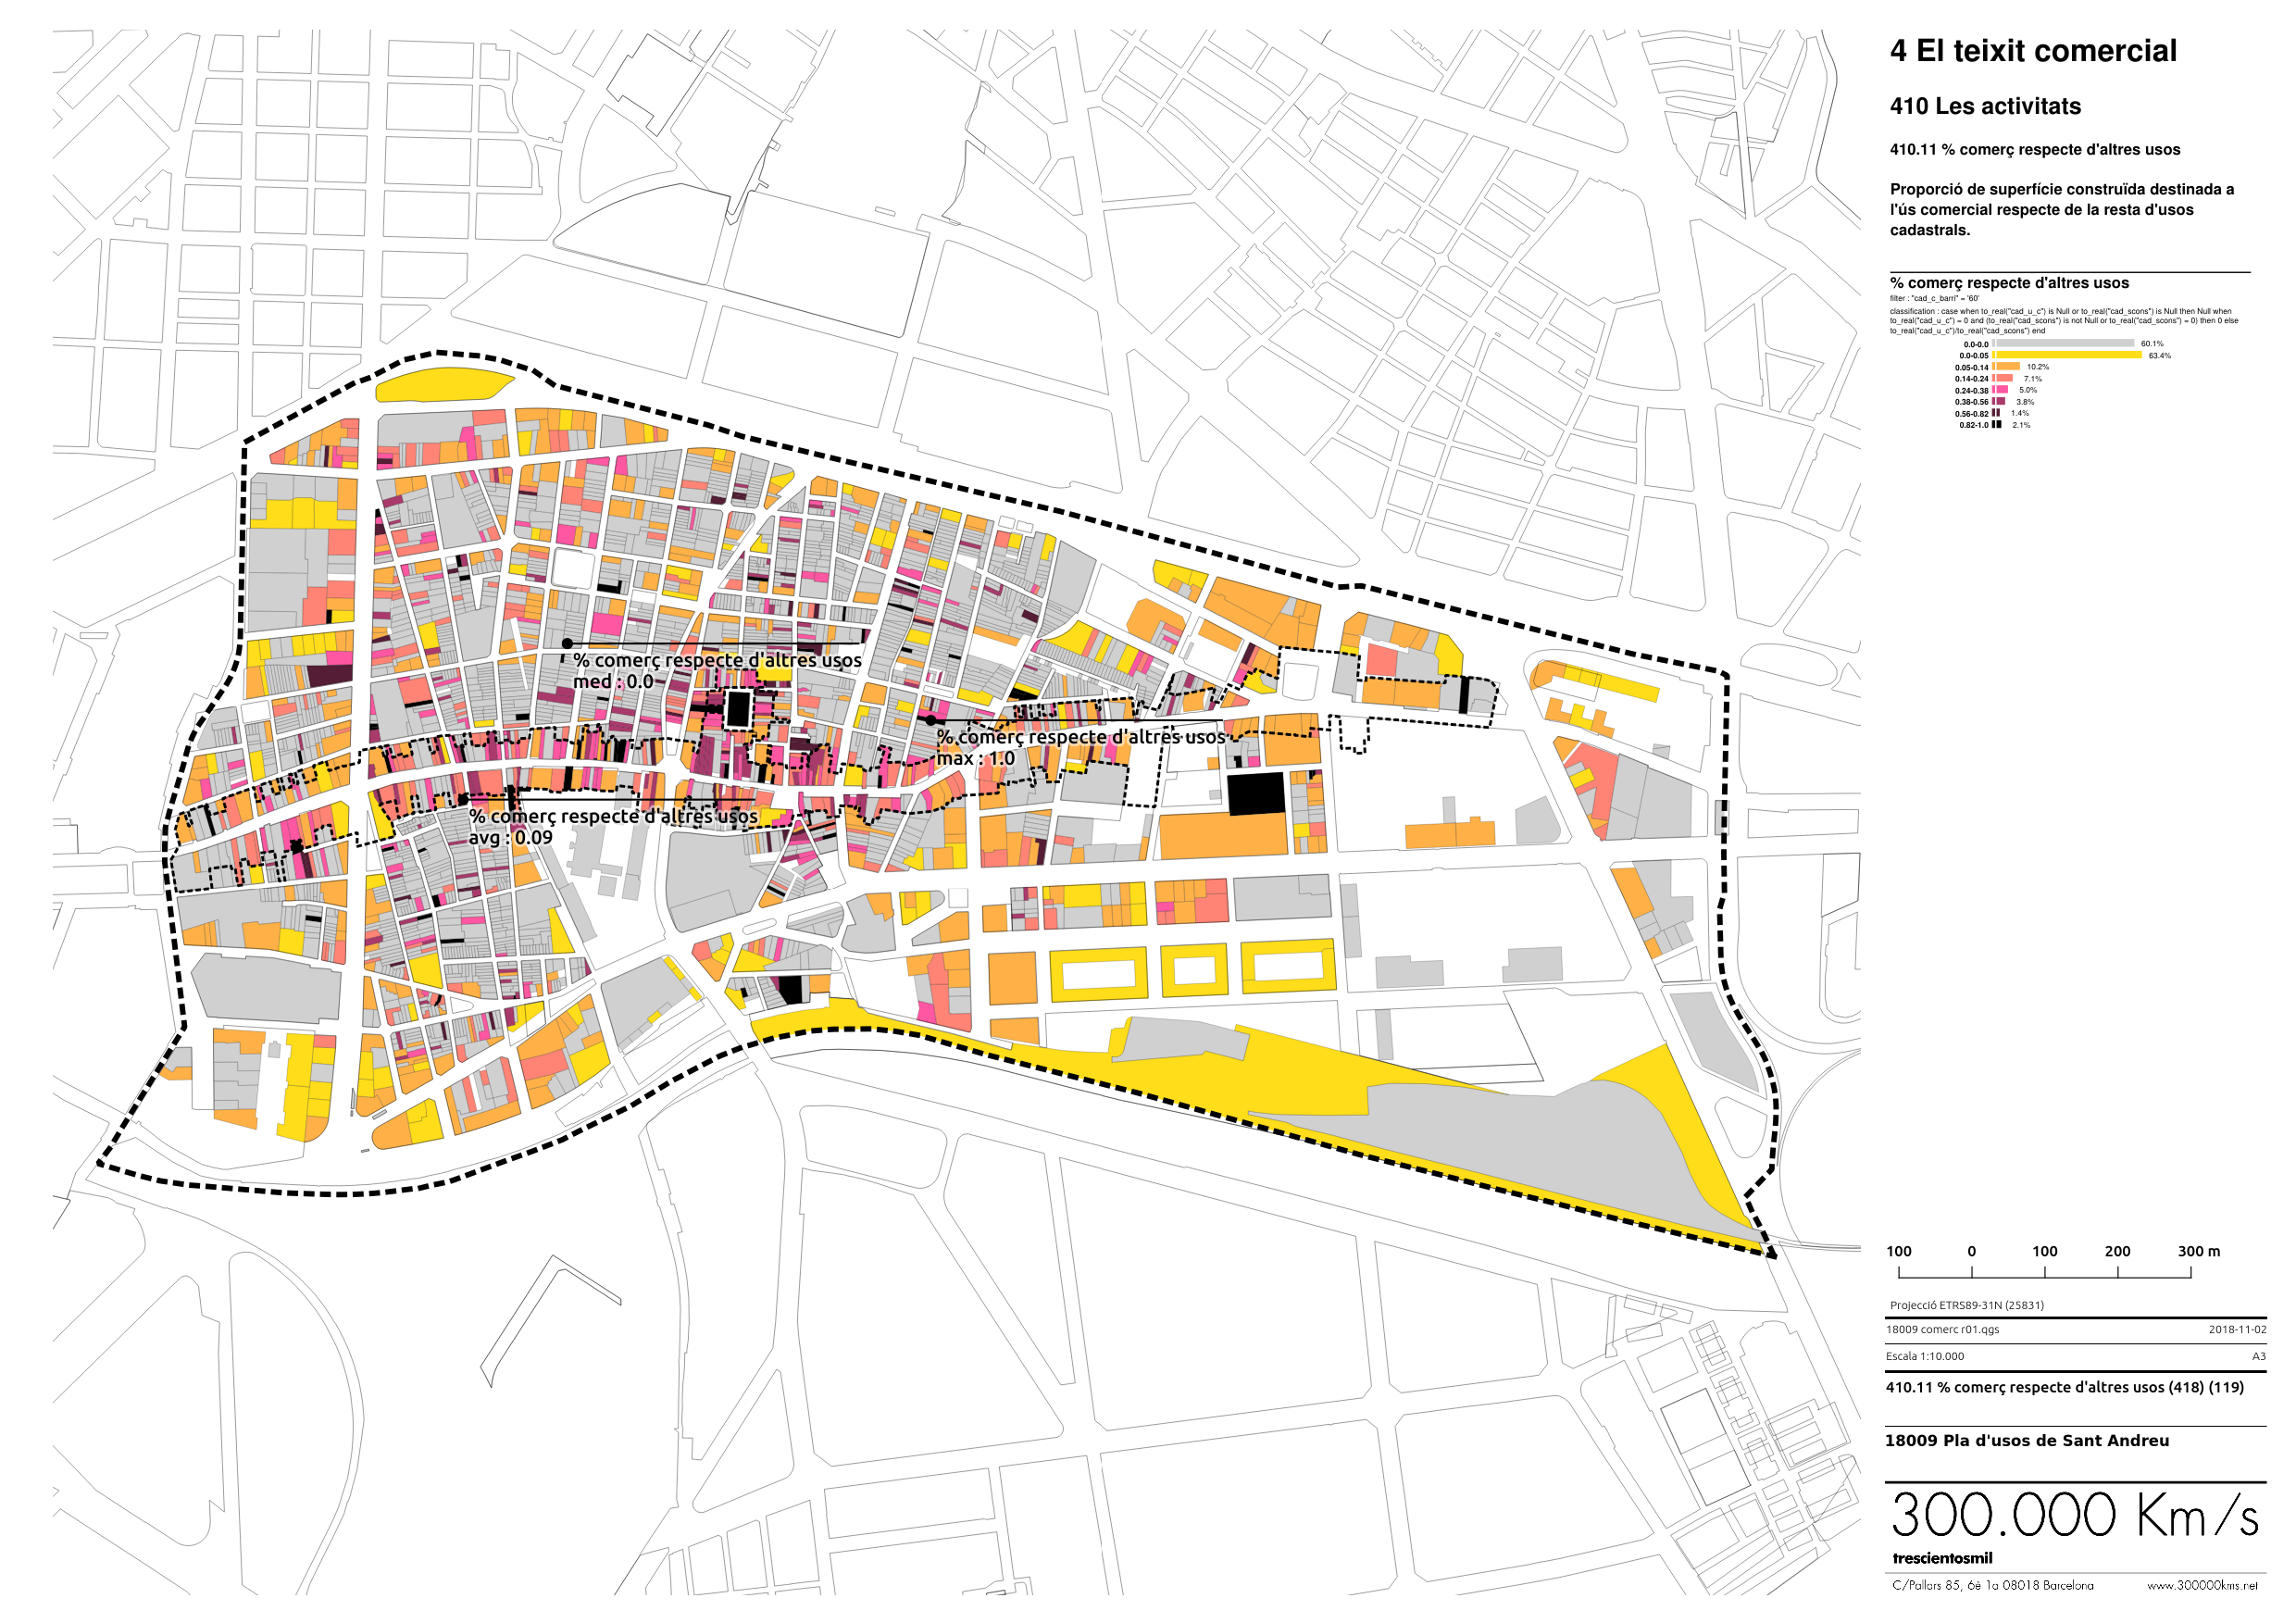 Carrer Gran de Sant Andreu Land Use Plan - 300.000 Km/s